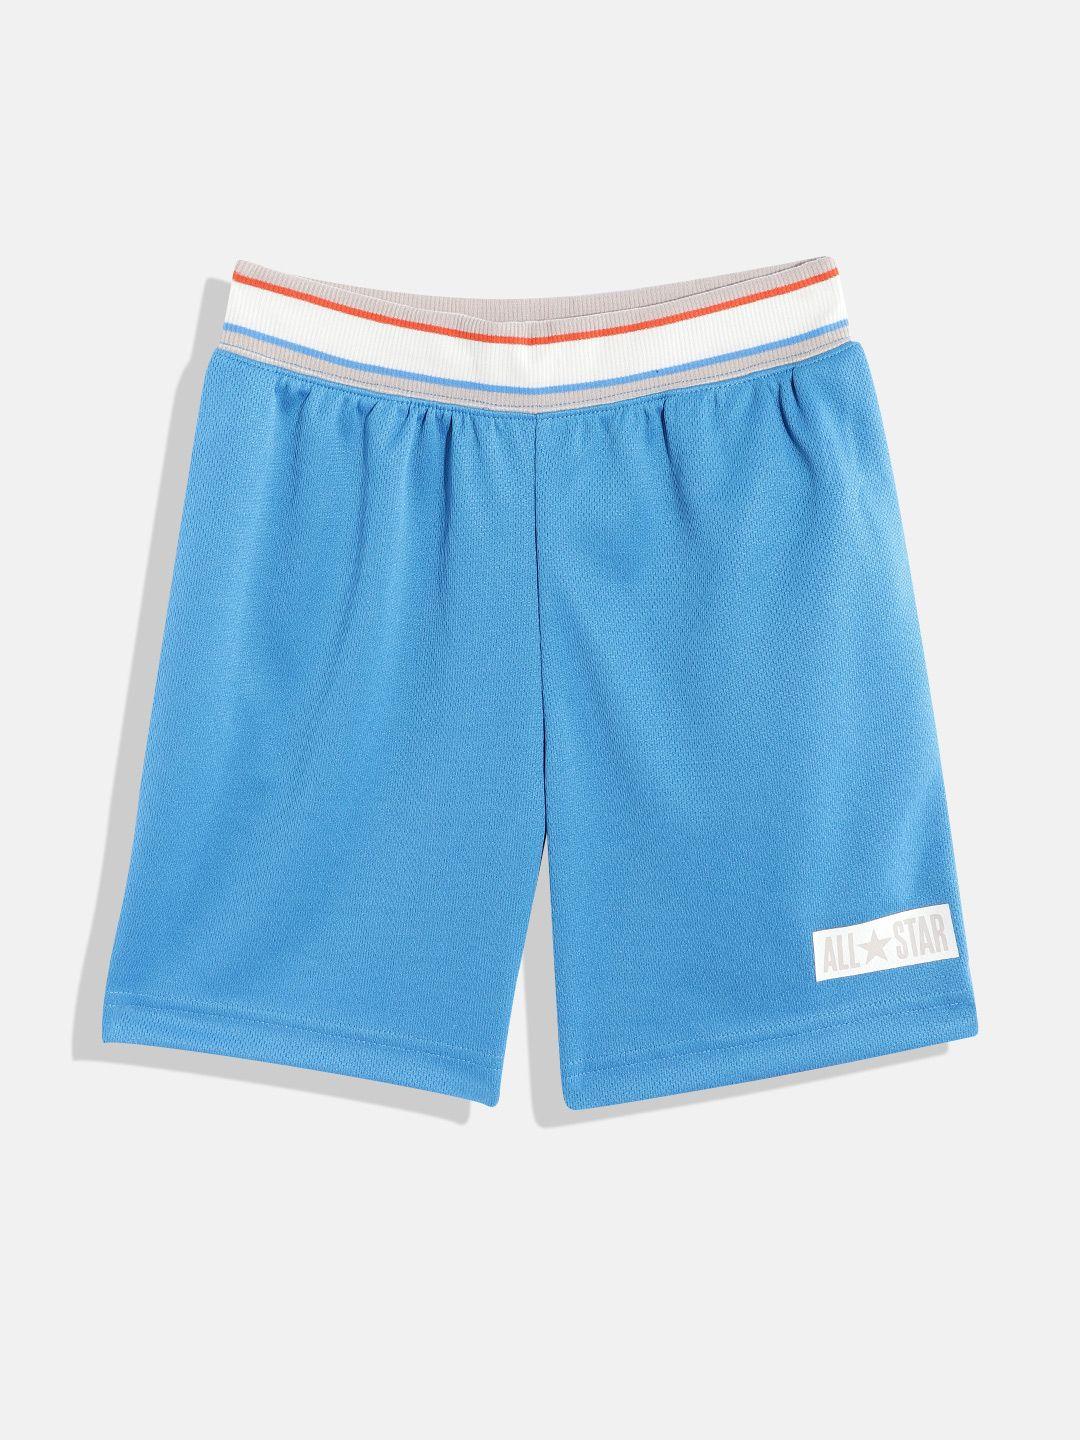 converse-boys-turquoise-blue-shorts